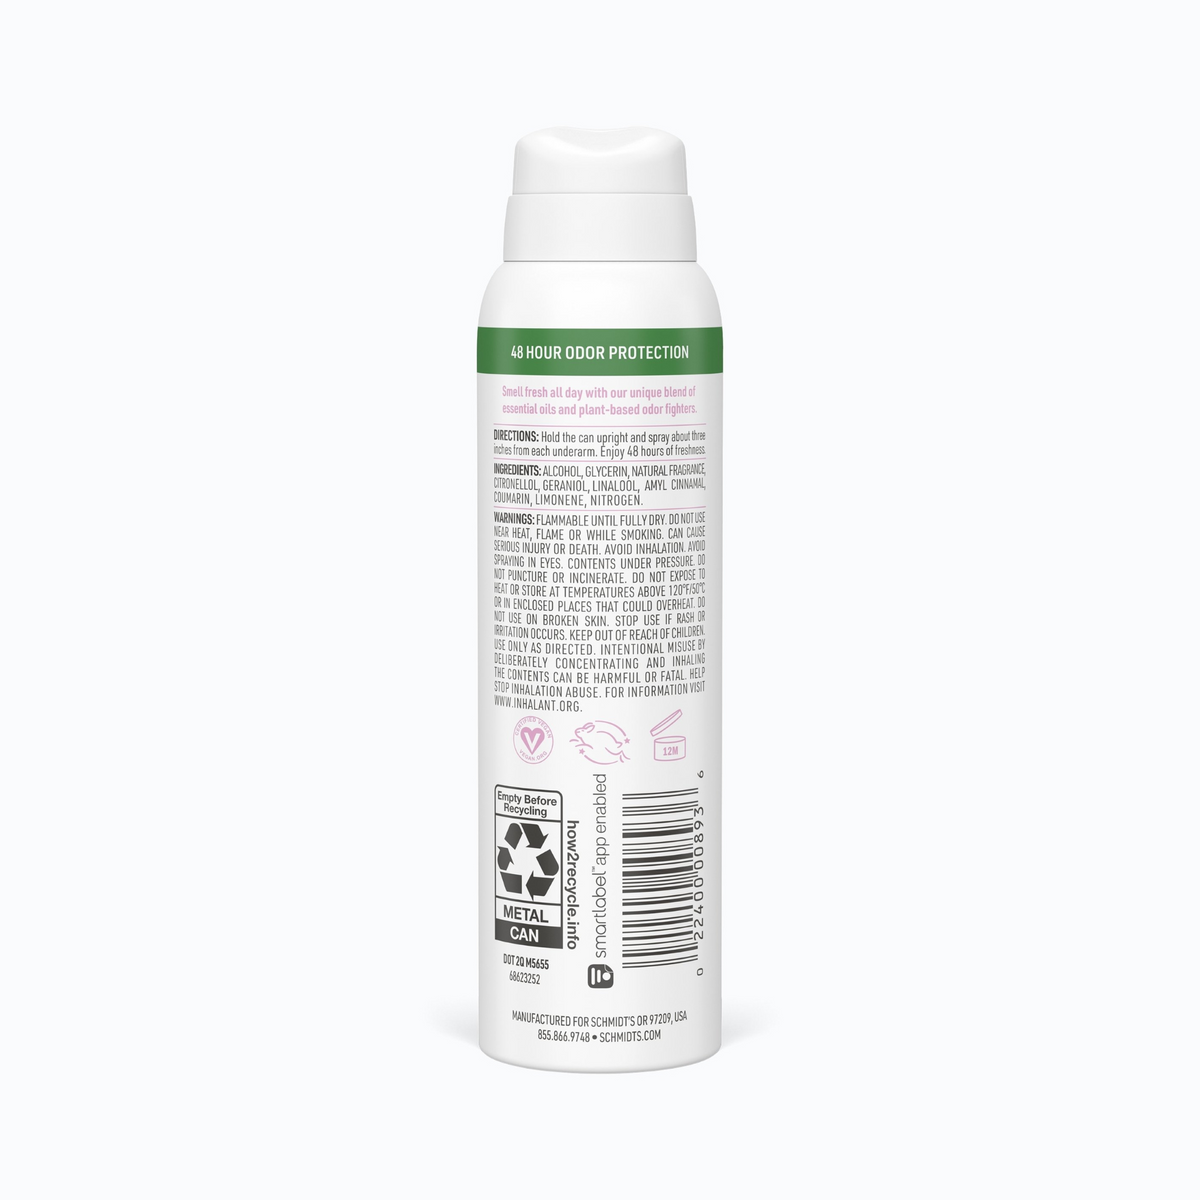 Schmidt's Spray Clean Powder Deodorant (3.2 oz) #10085622